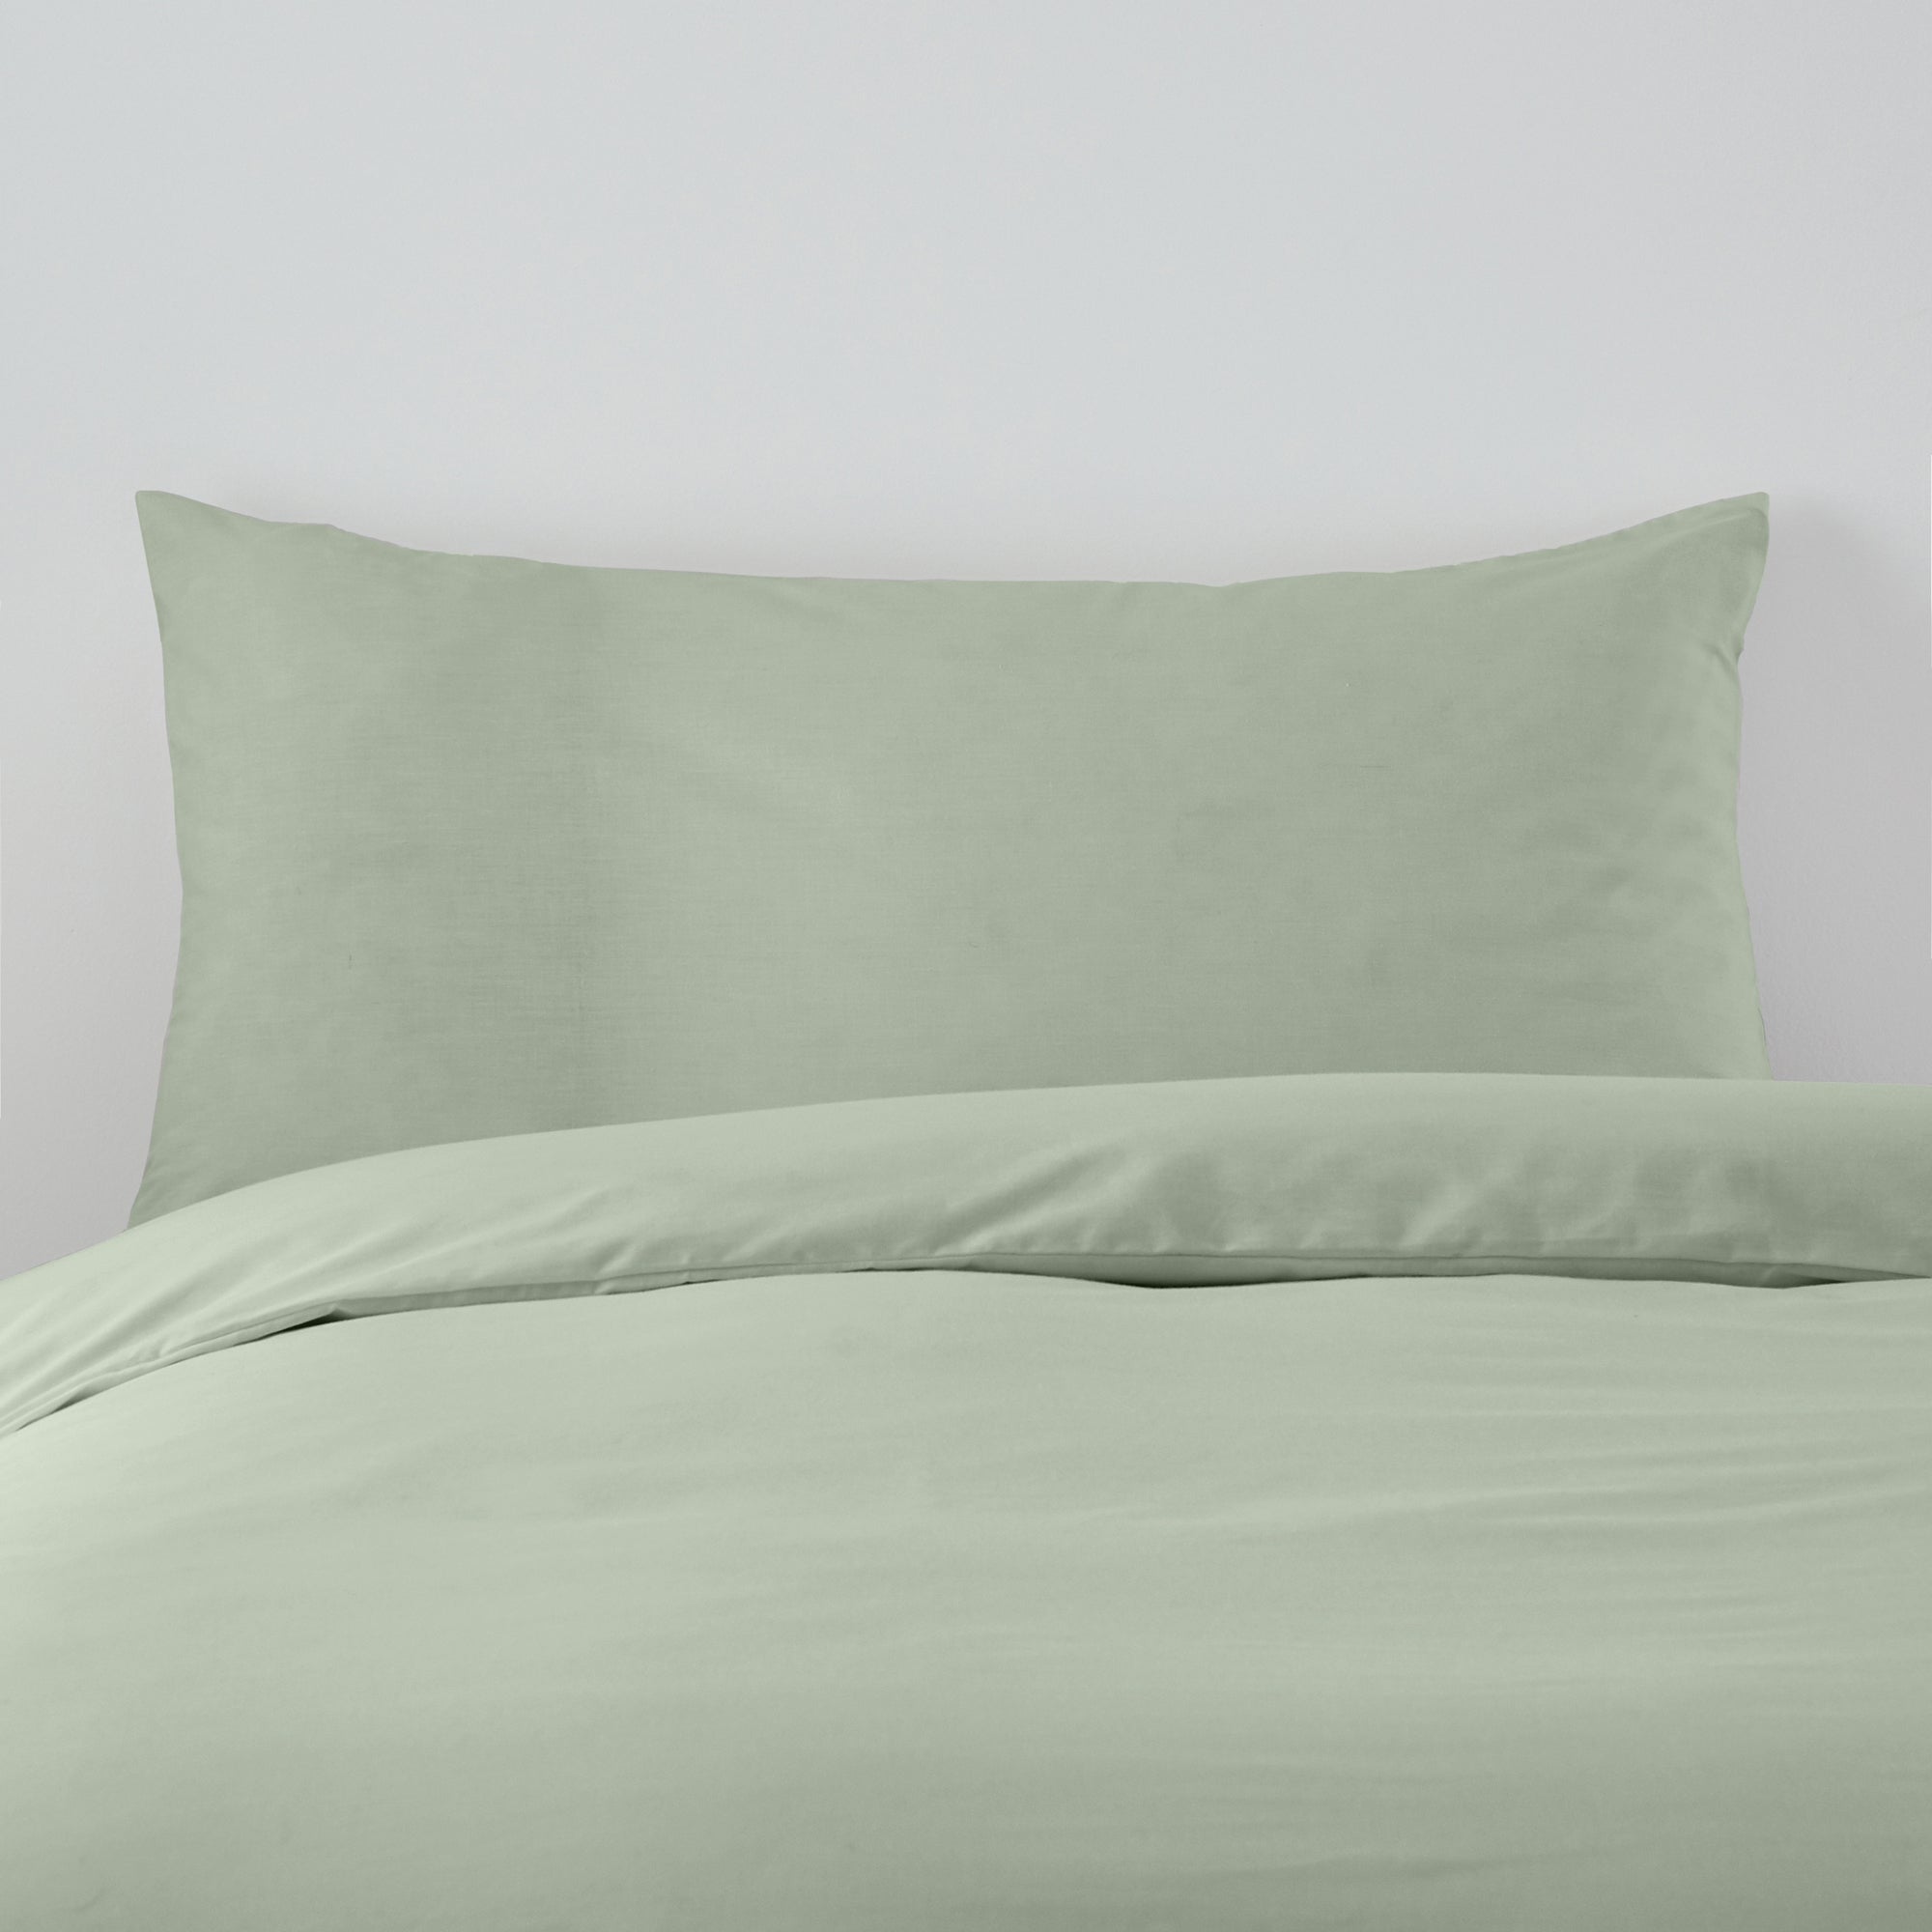 Soft Easycare Polycotton Standard Pillowcase Pair Green